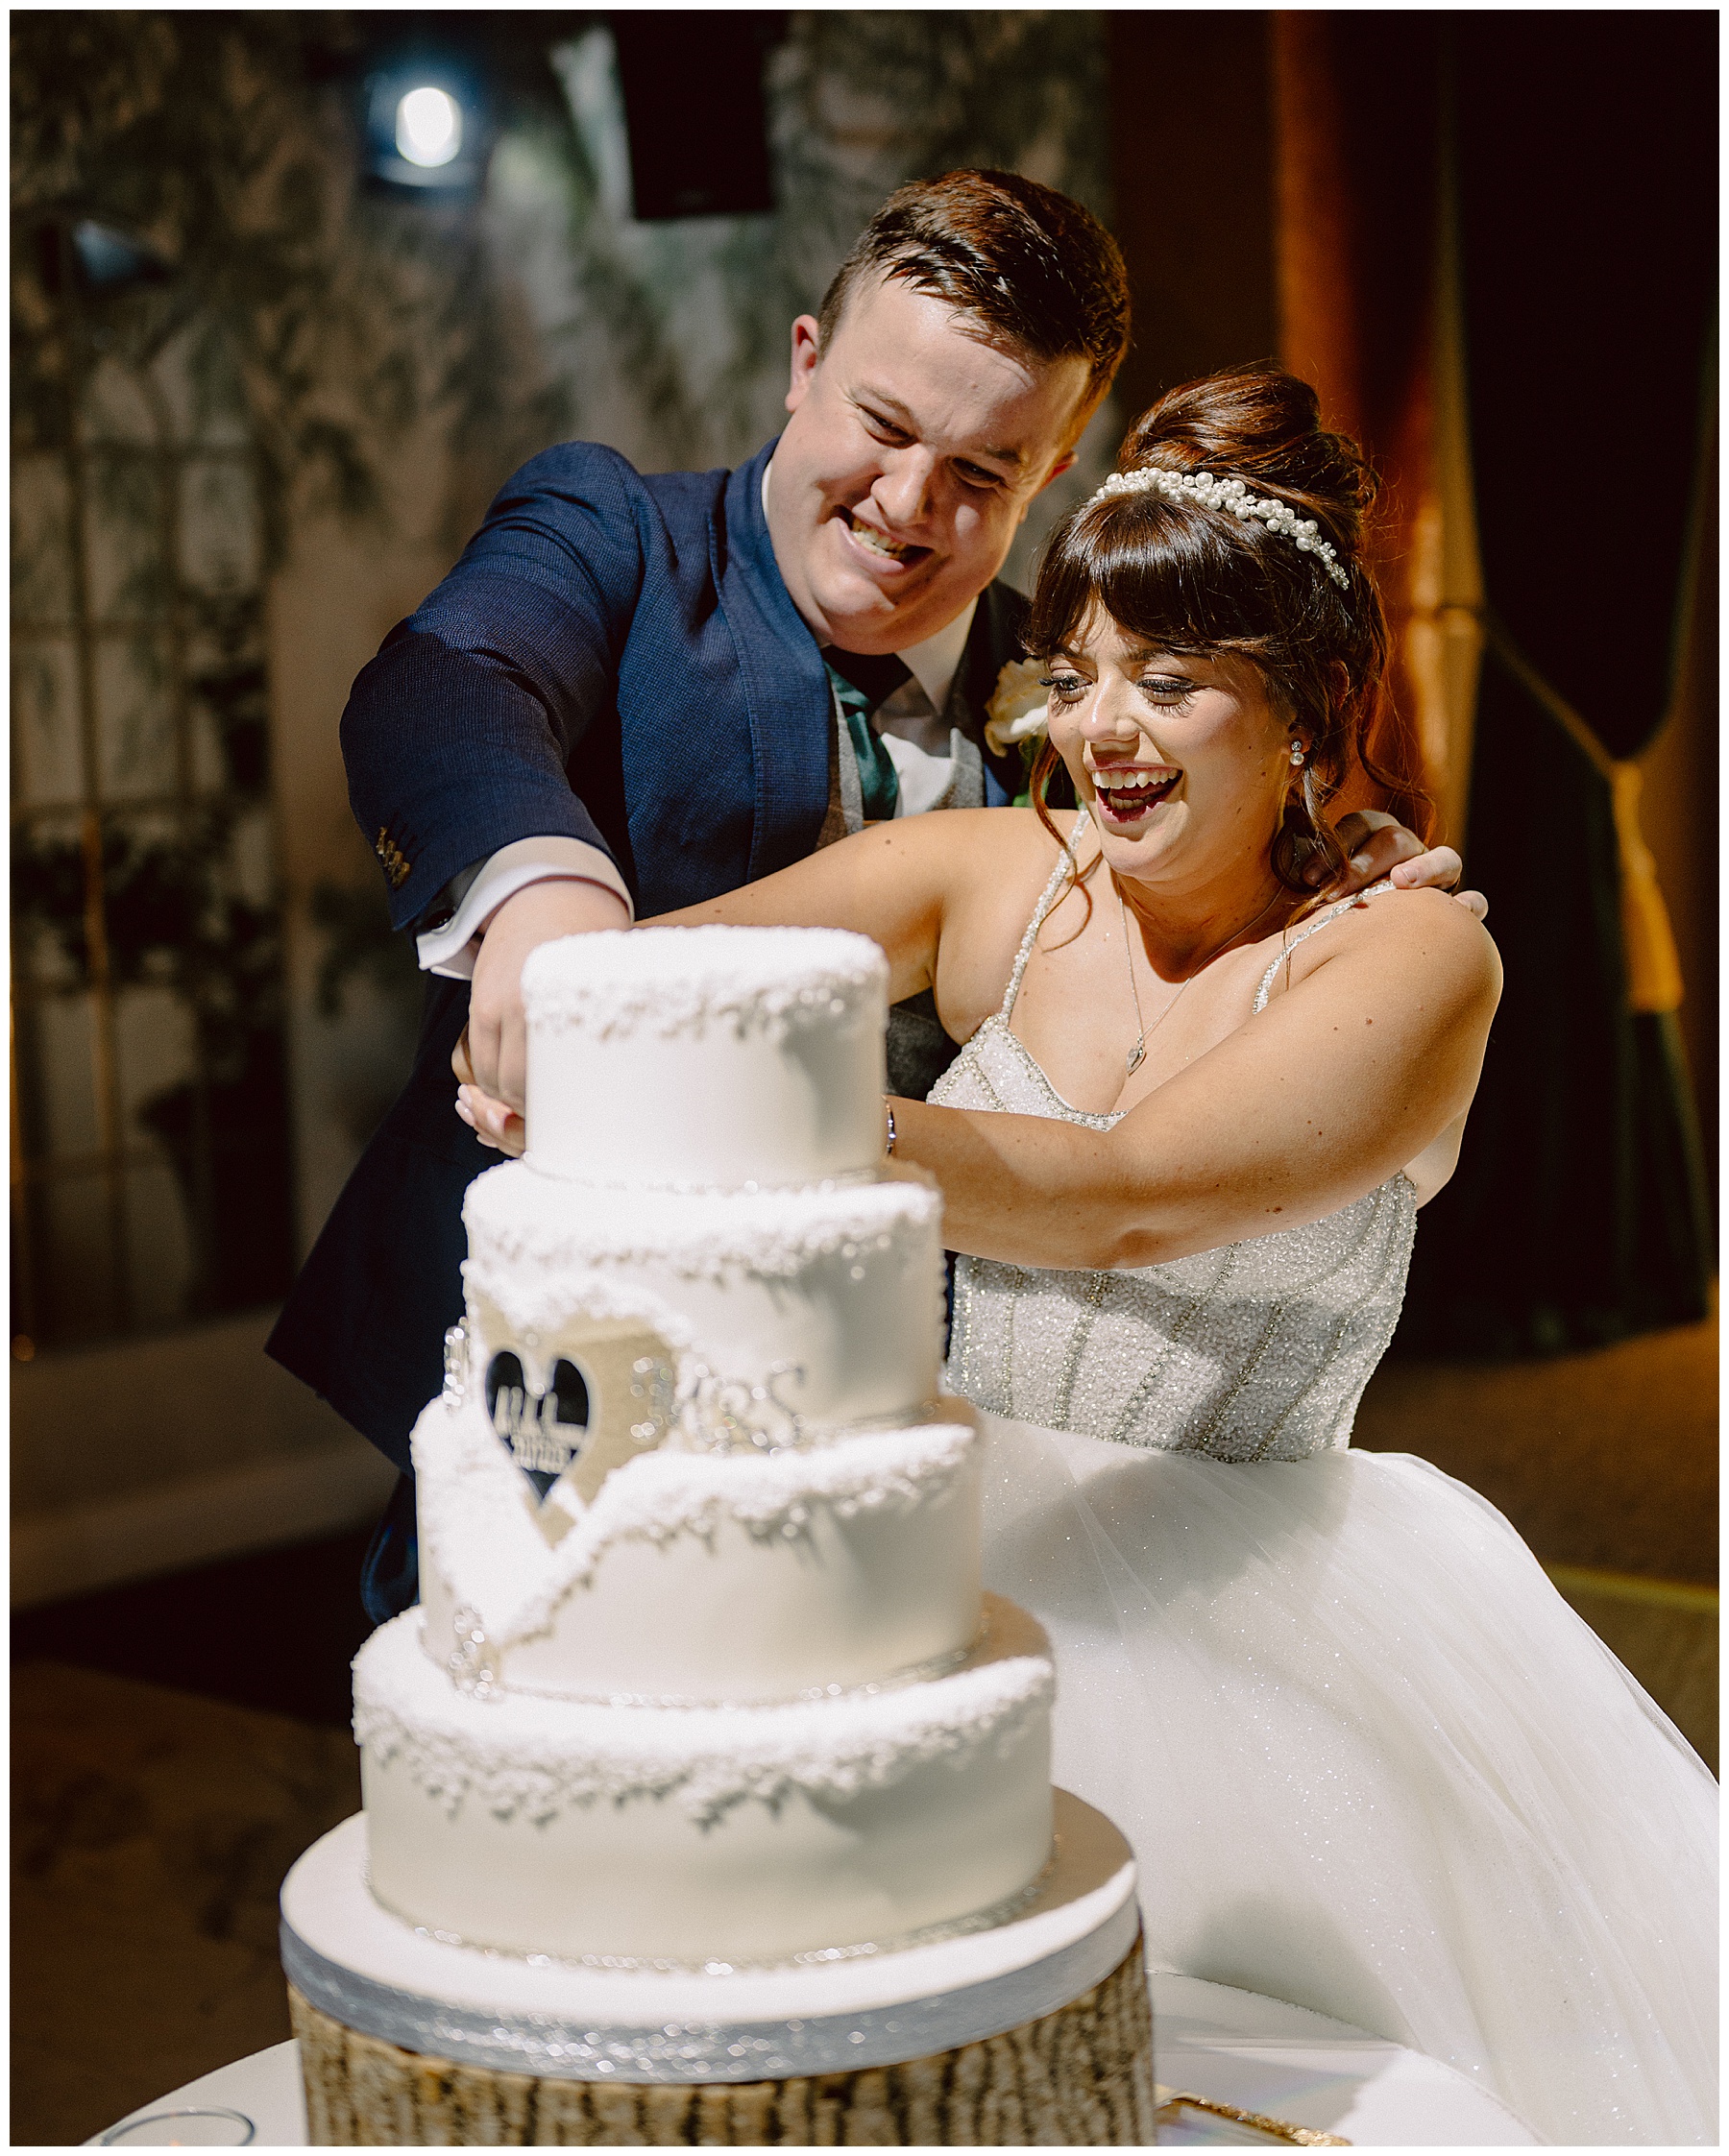 Bride & Groom Cut Wedding Cake